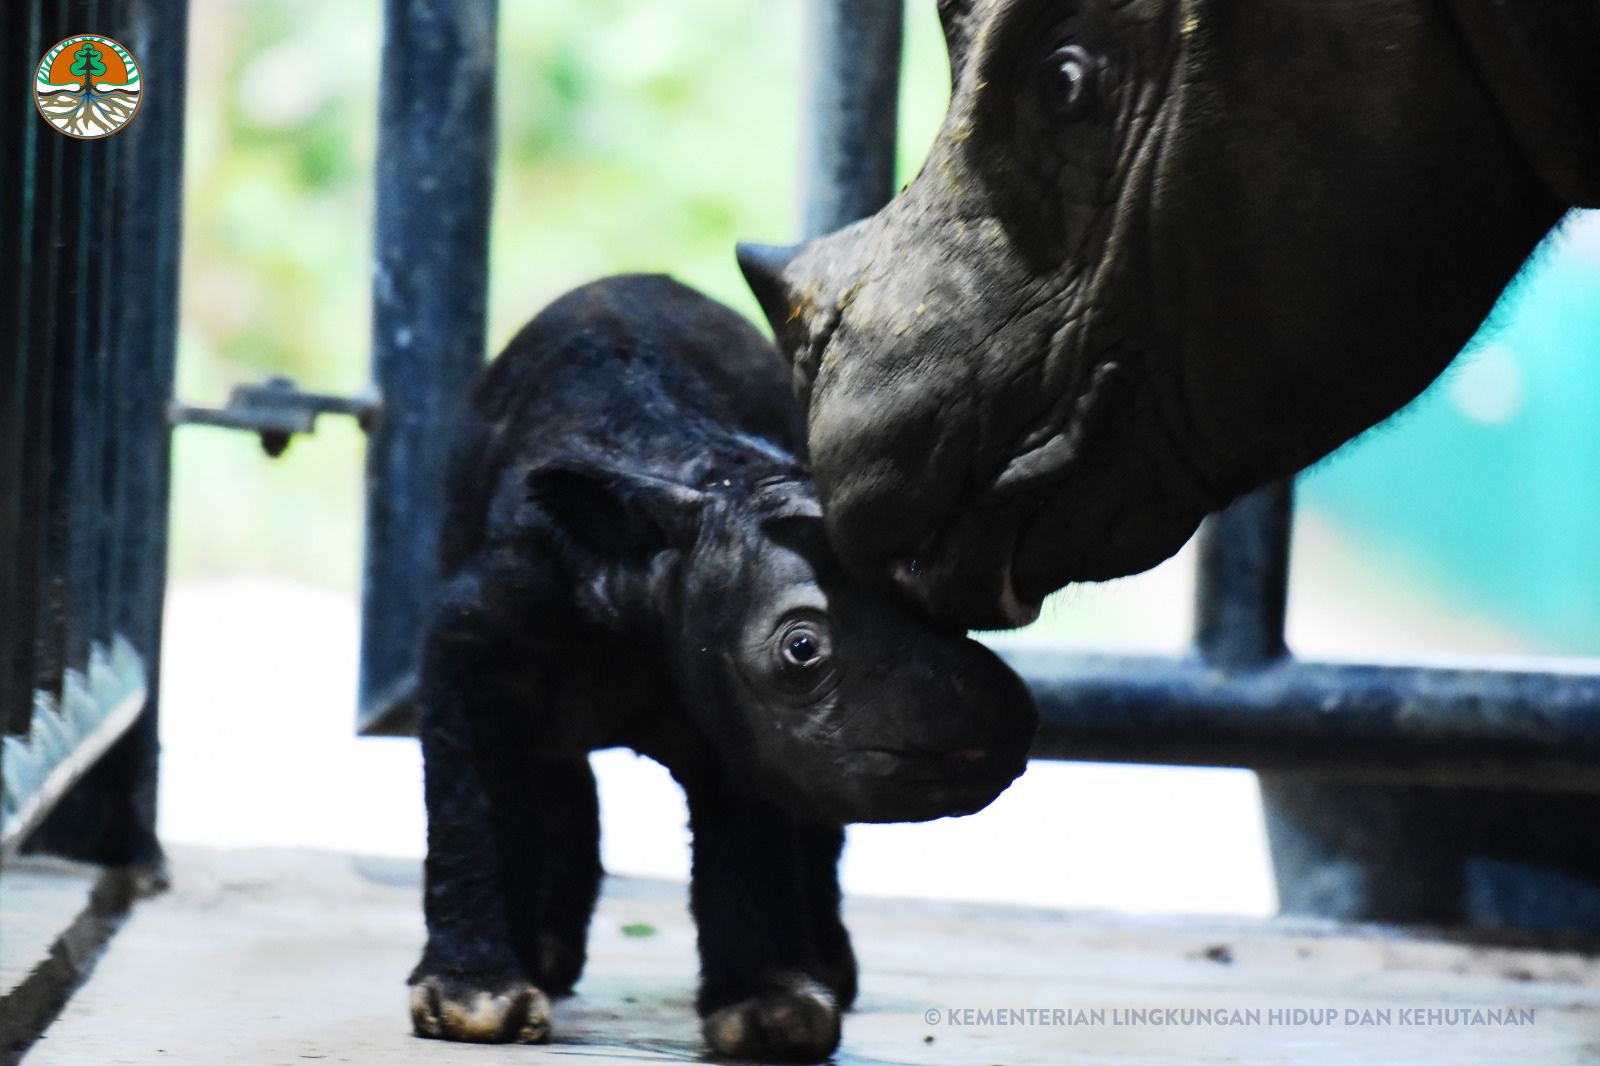 Rhino Born at the Sumatran Rhino Sanctuary Gives Birth to Her First Calf